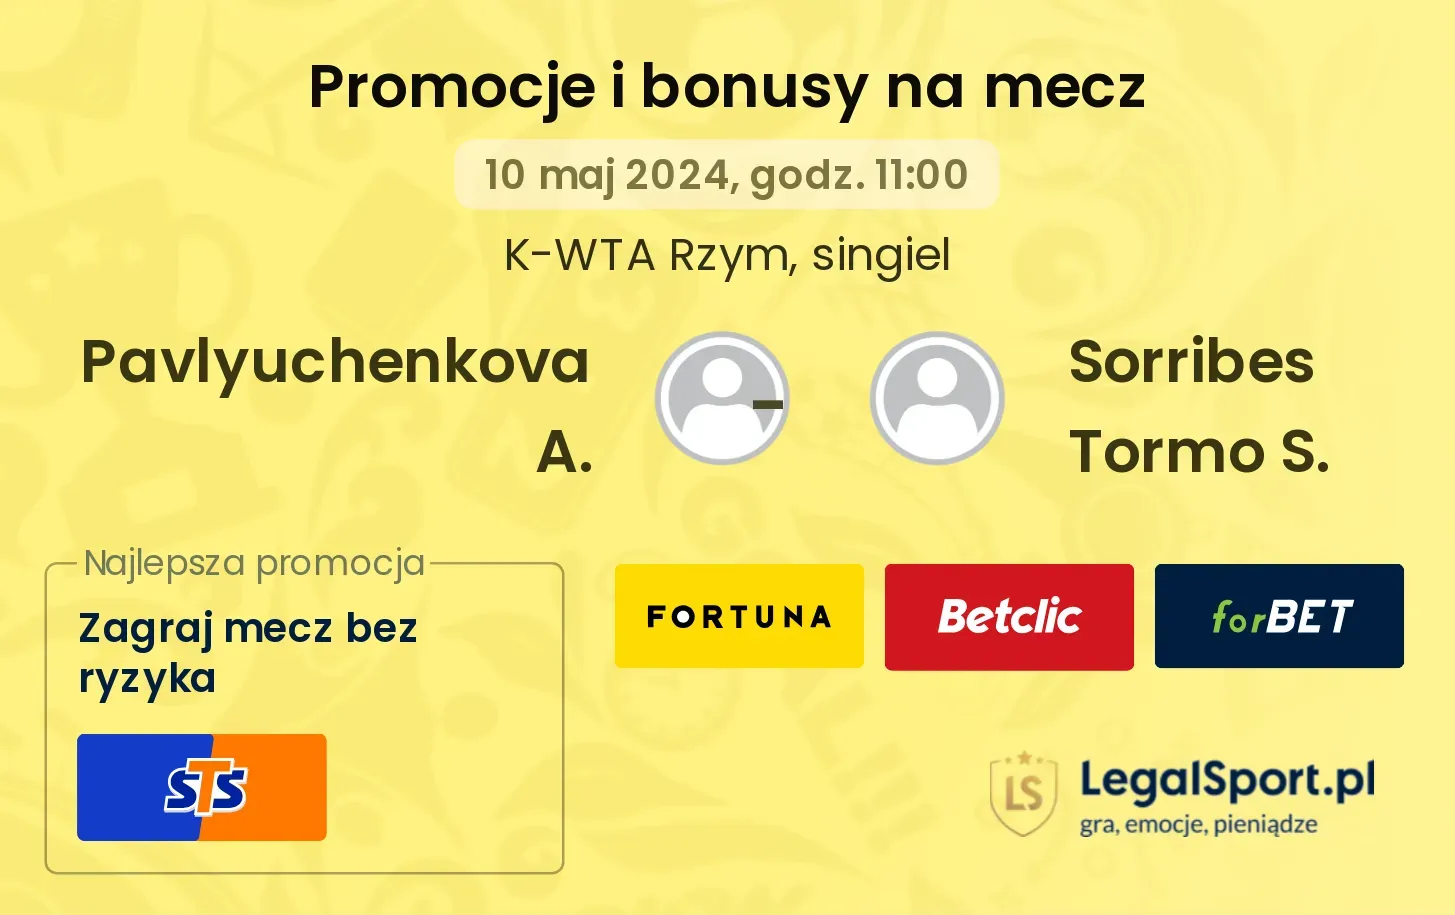 Pavlyuchenkova A. - Sorribes Tormo S. promocje bonusy na mecz